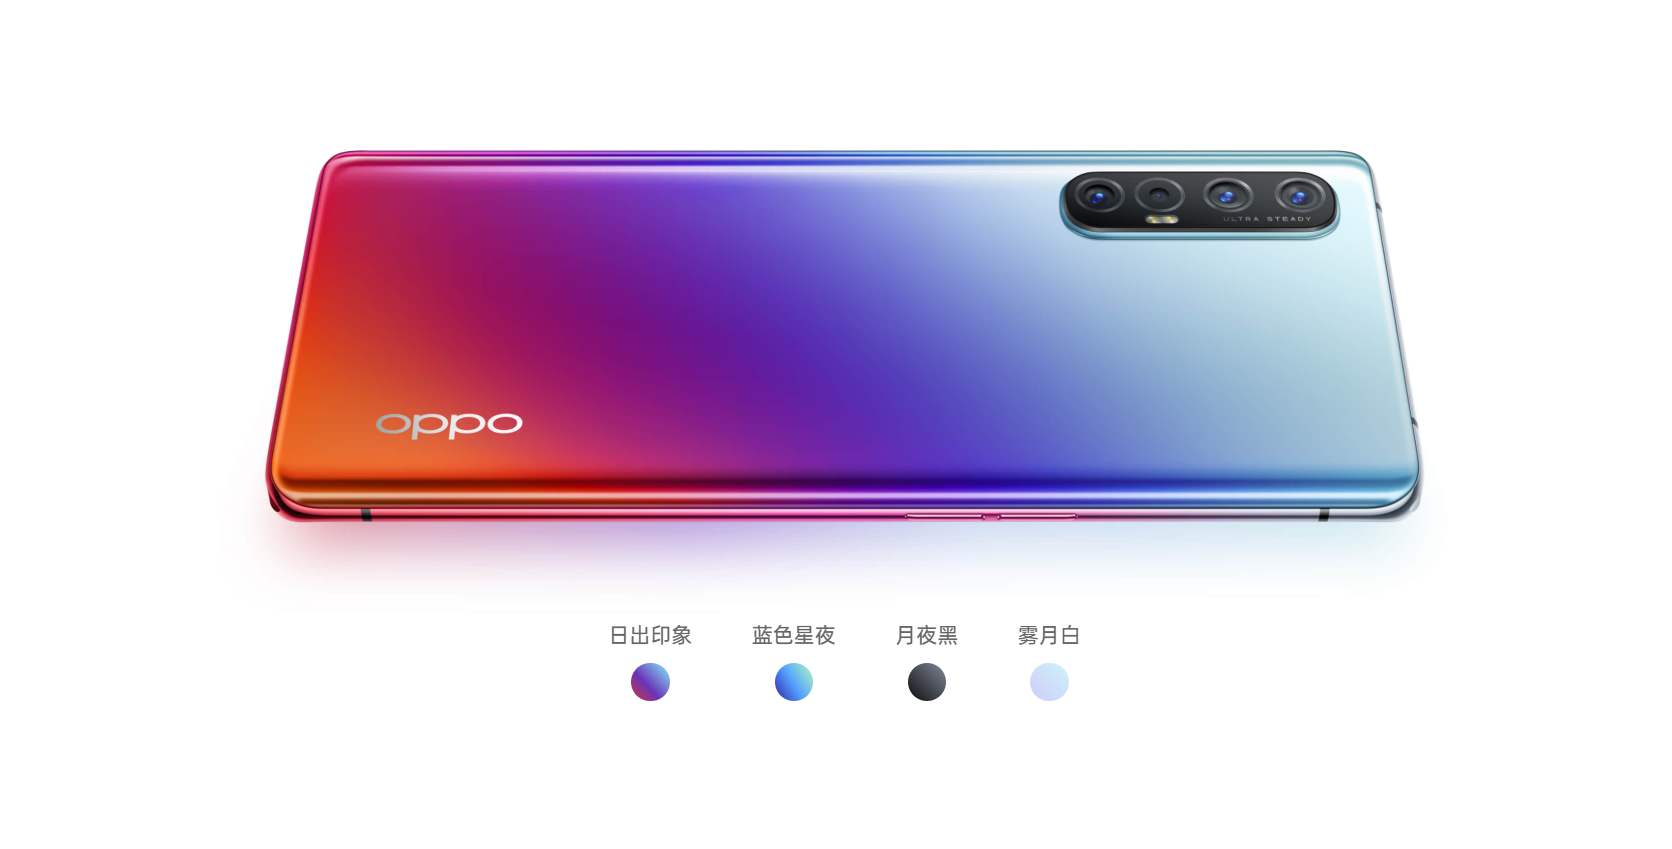 opporeno3pro支持無線充電嗎?有紅外功能嗎?